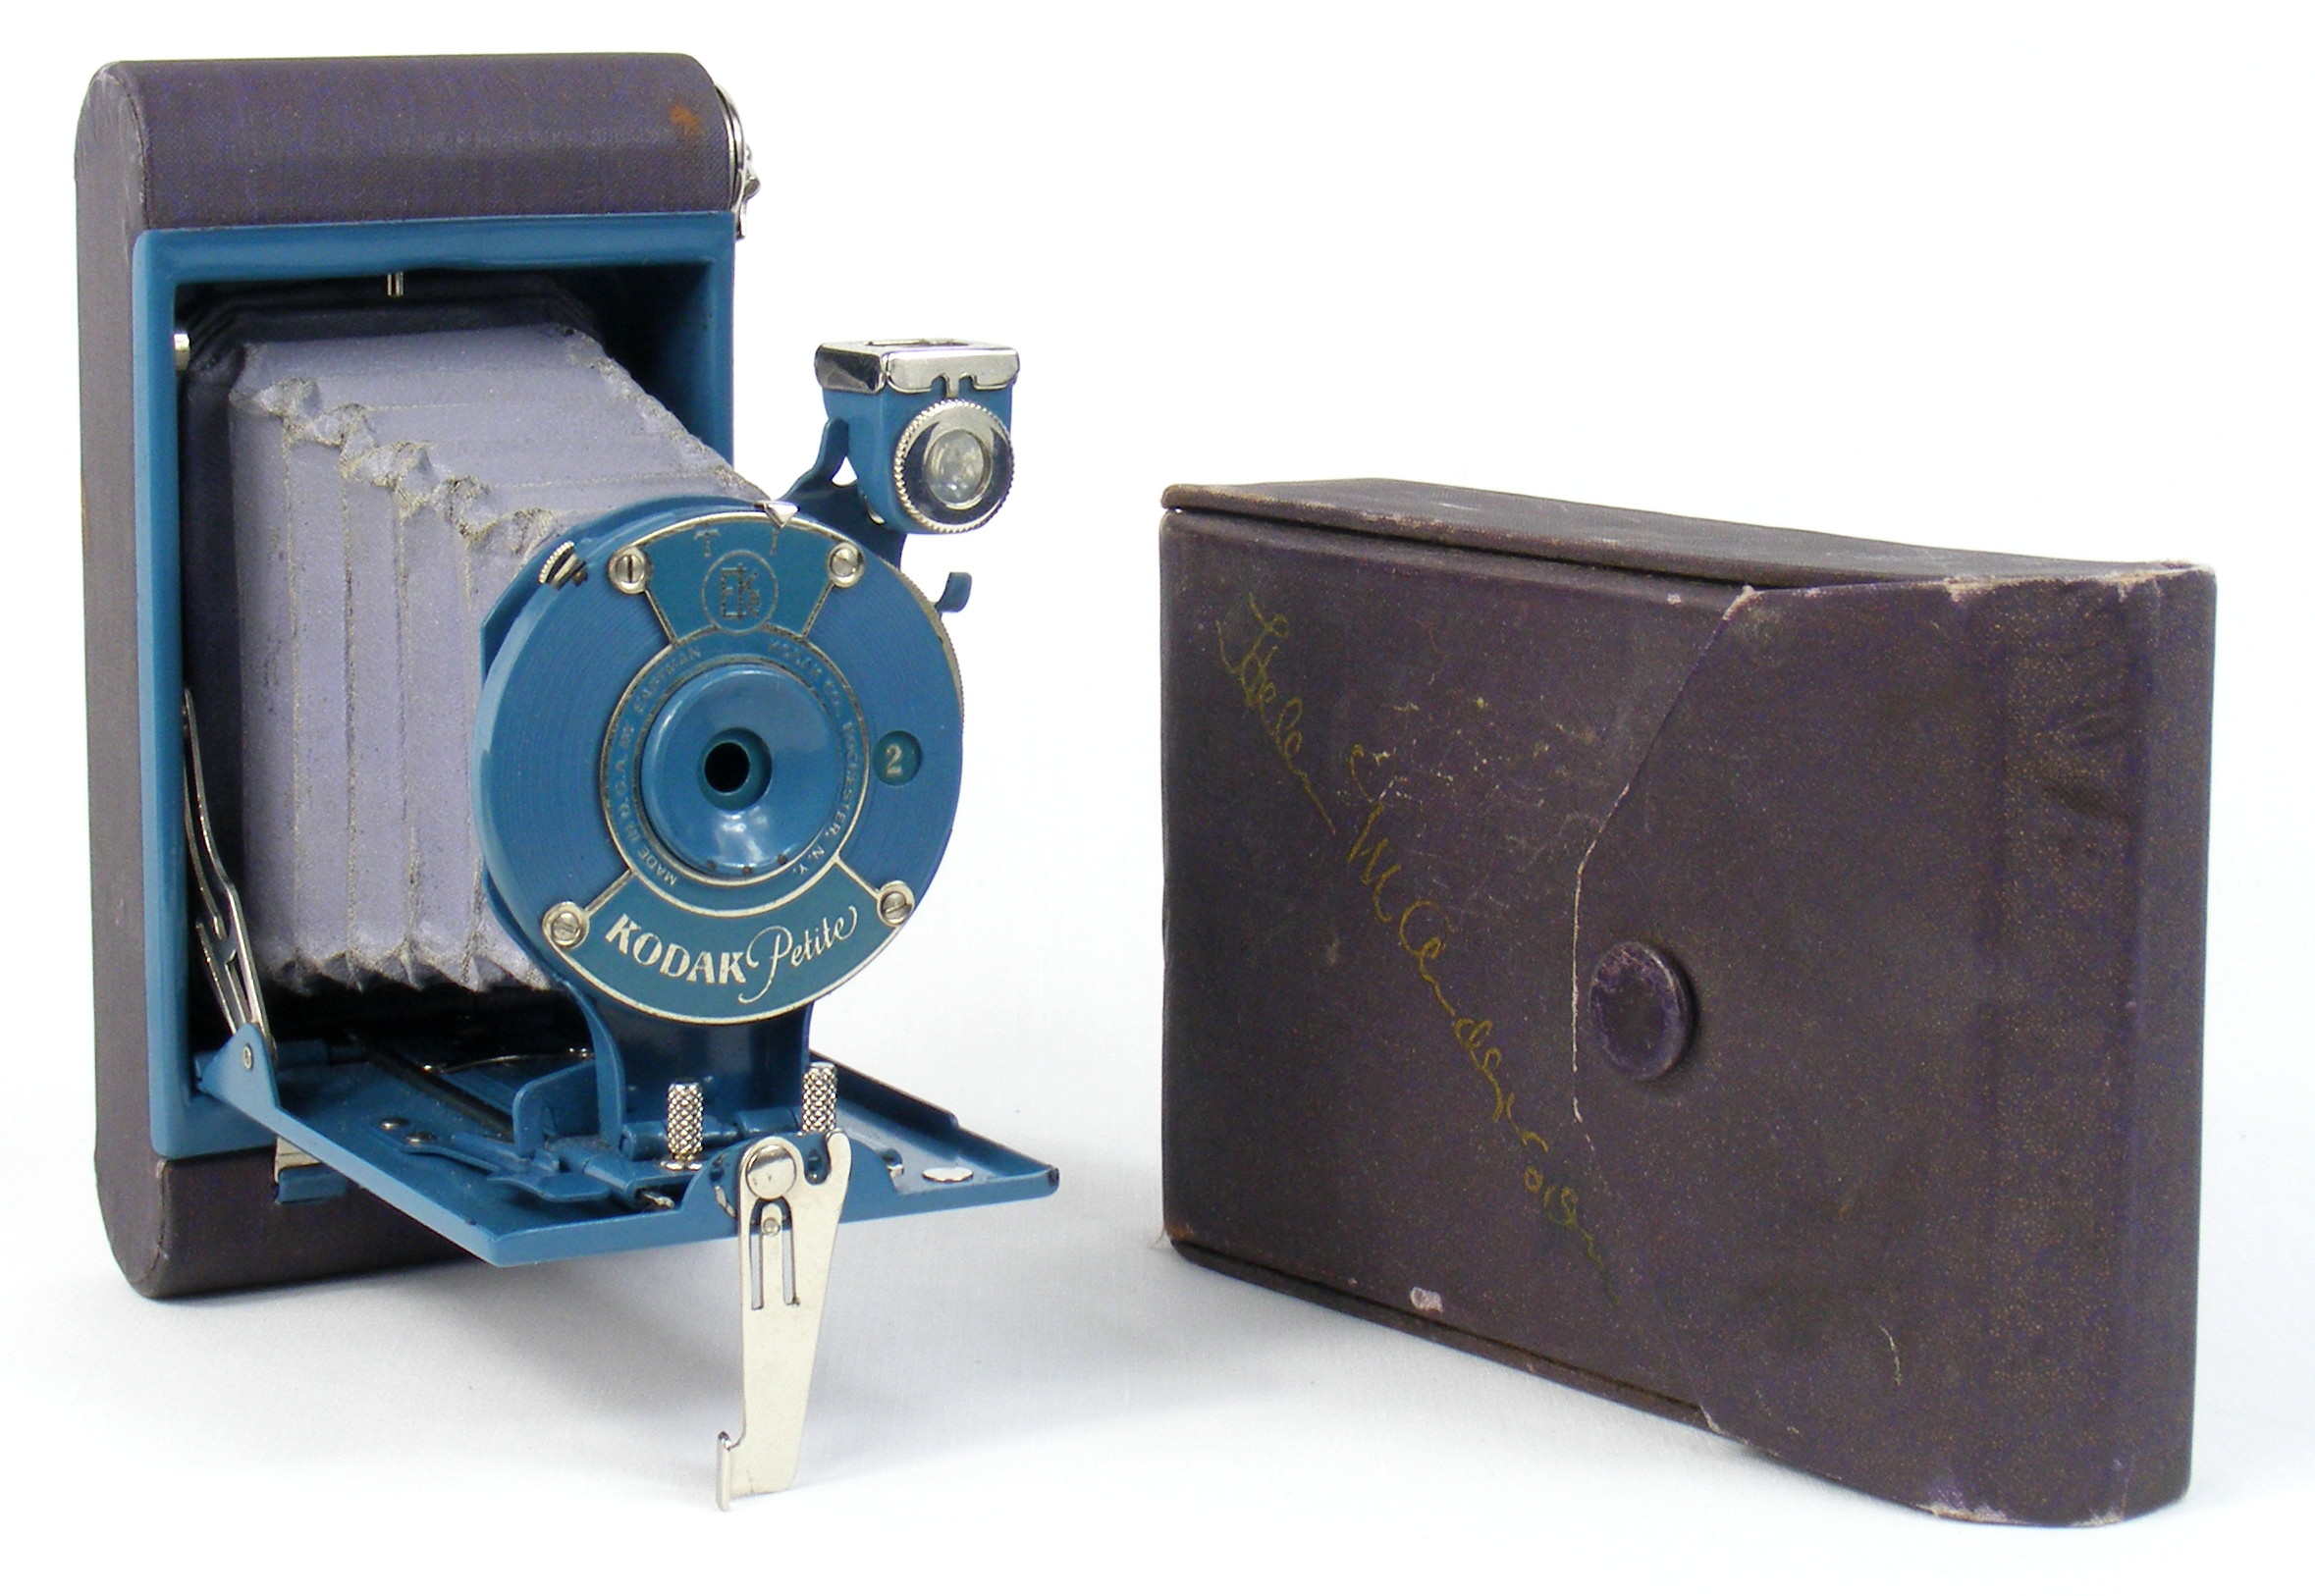 Image of Kodak Petite folding camera with matvhing case